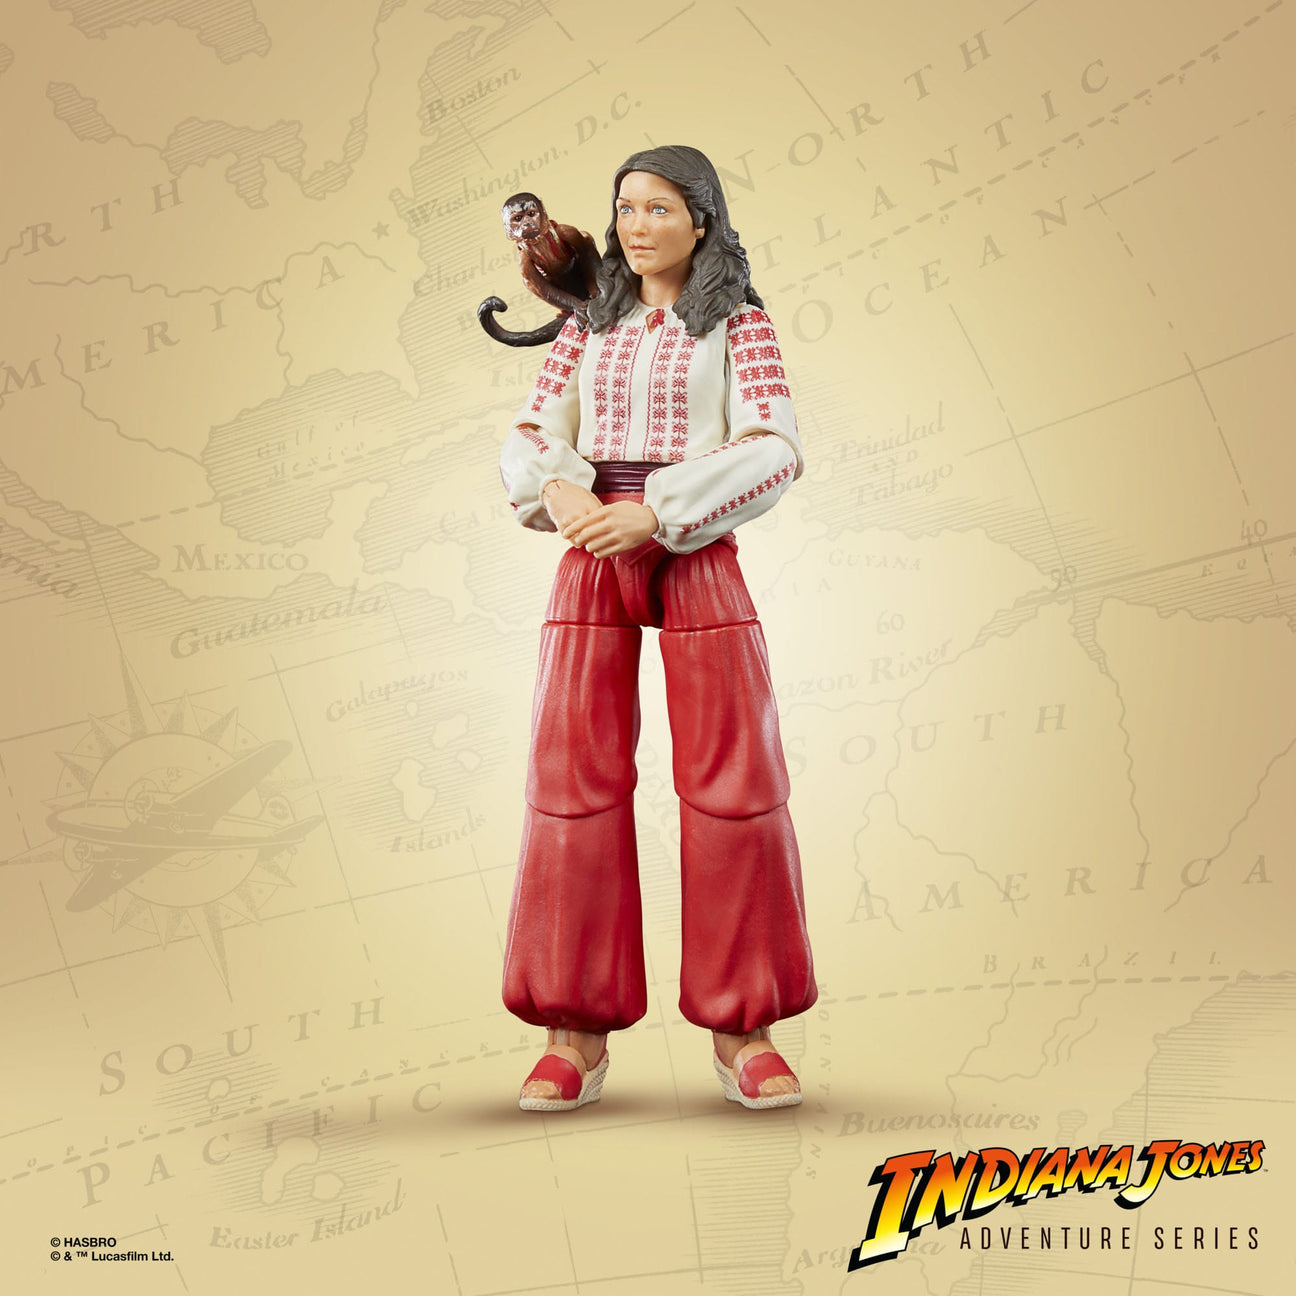 Indiana Jones Adventure Series: Marion Ravenwood (Raiders of the Lost Ark)-Actionfiguren-Hasbro-Mighty Underground